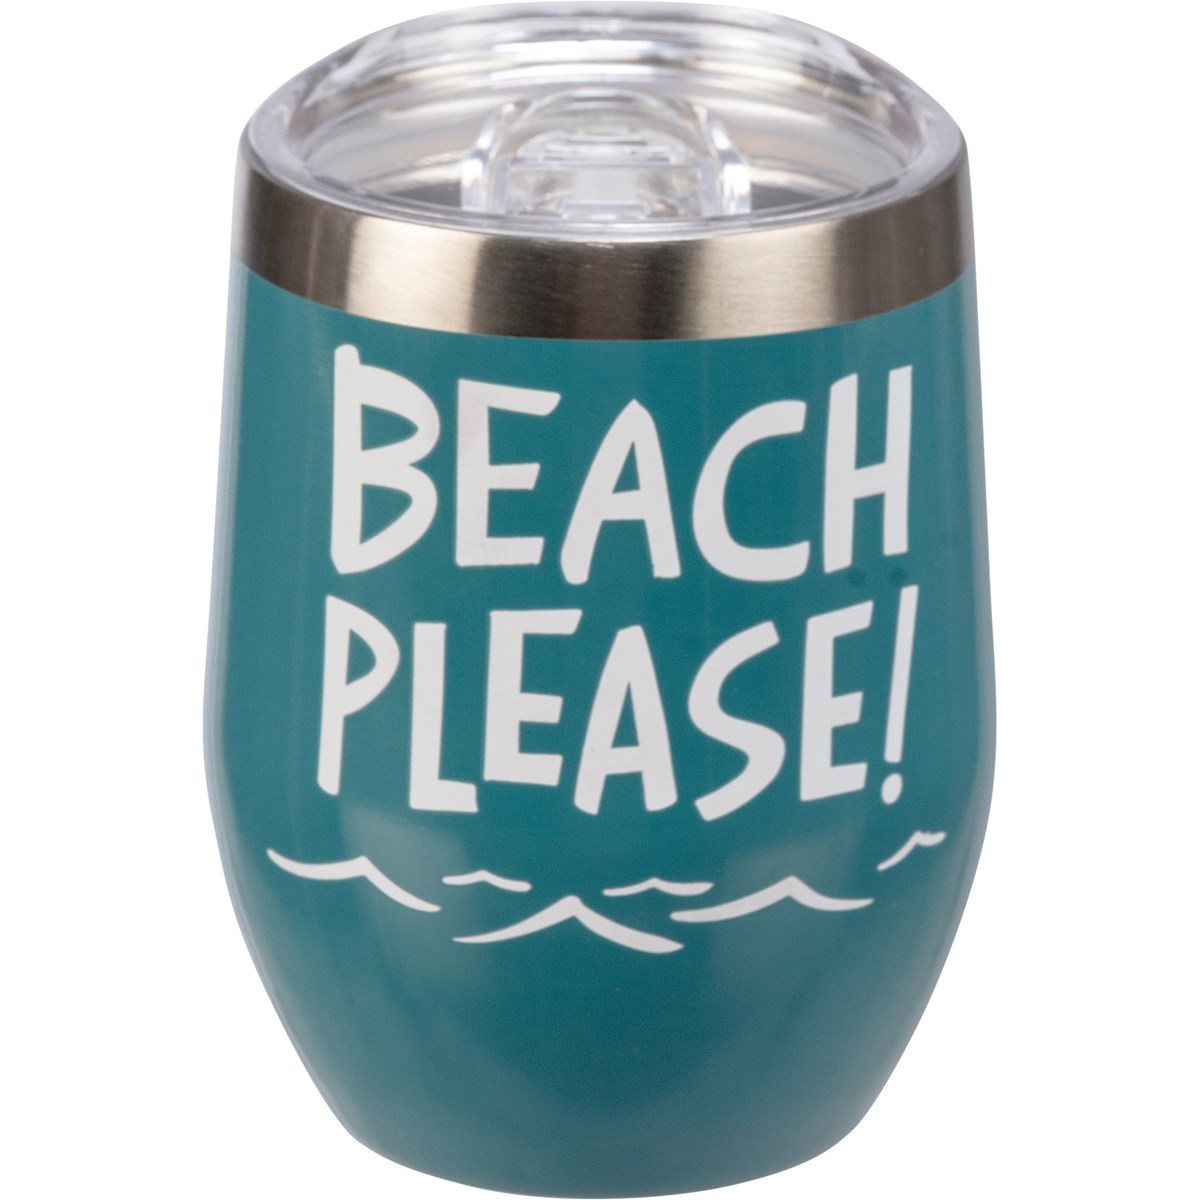 Beach Please Wine Tumbler - Stainless Steel, Plastic